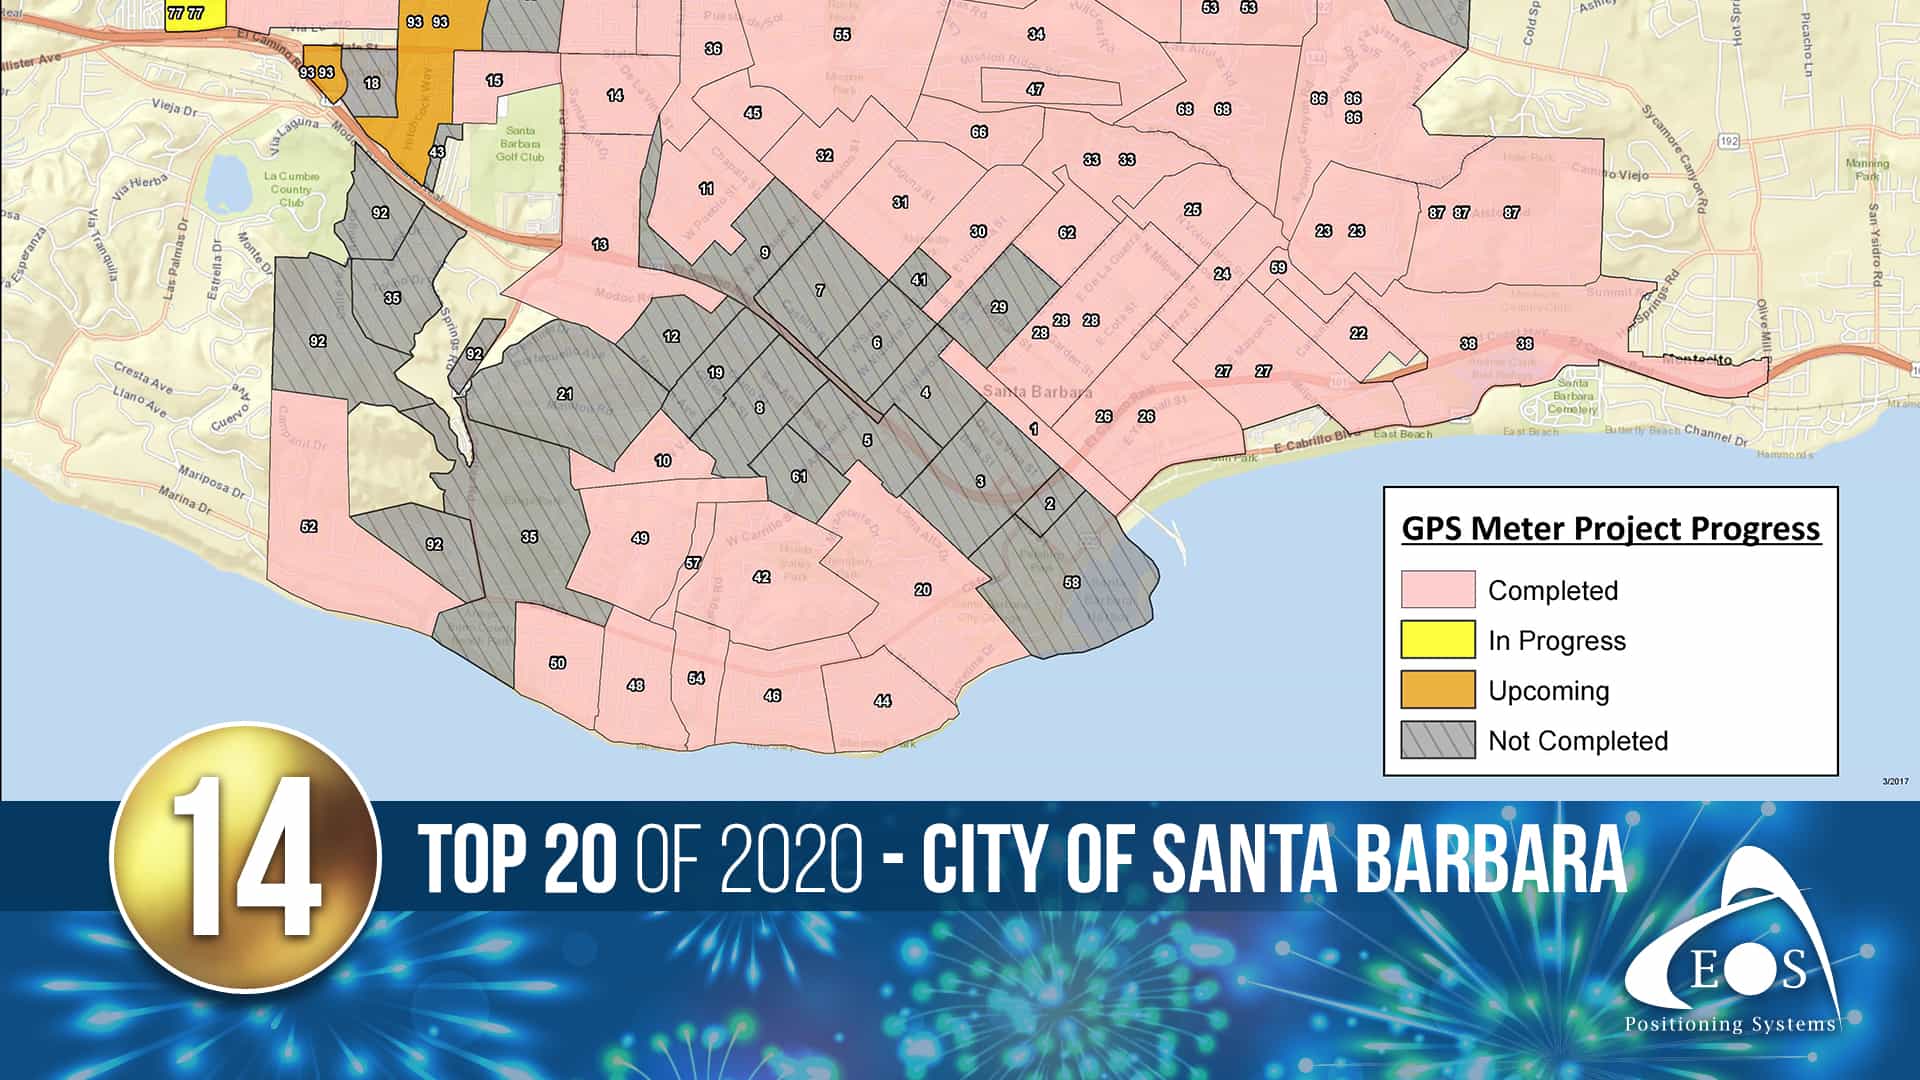 Eos Positioning Systems blog top articles of 2020: 14 - City of Santa Barbara